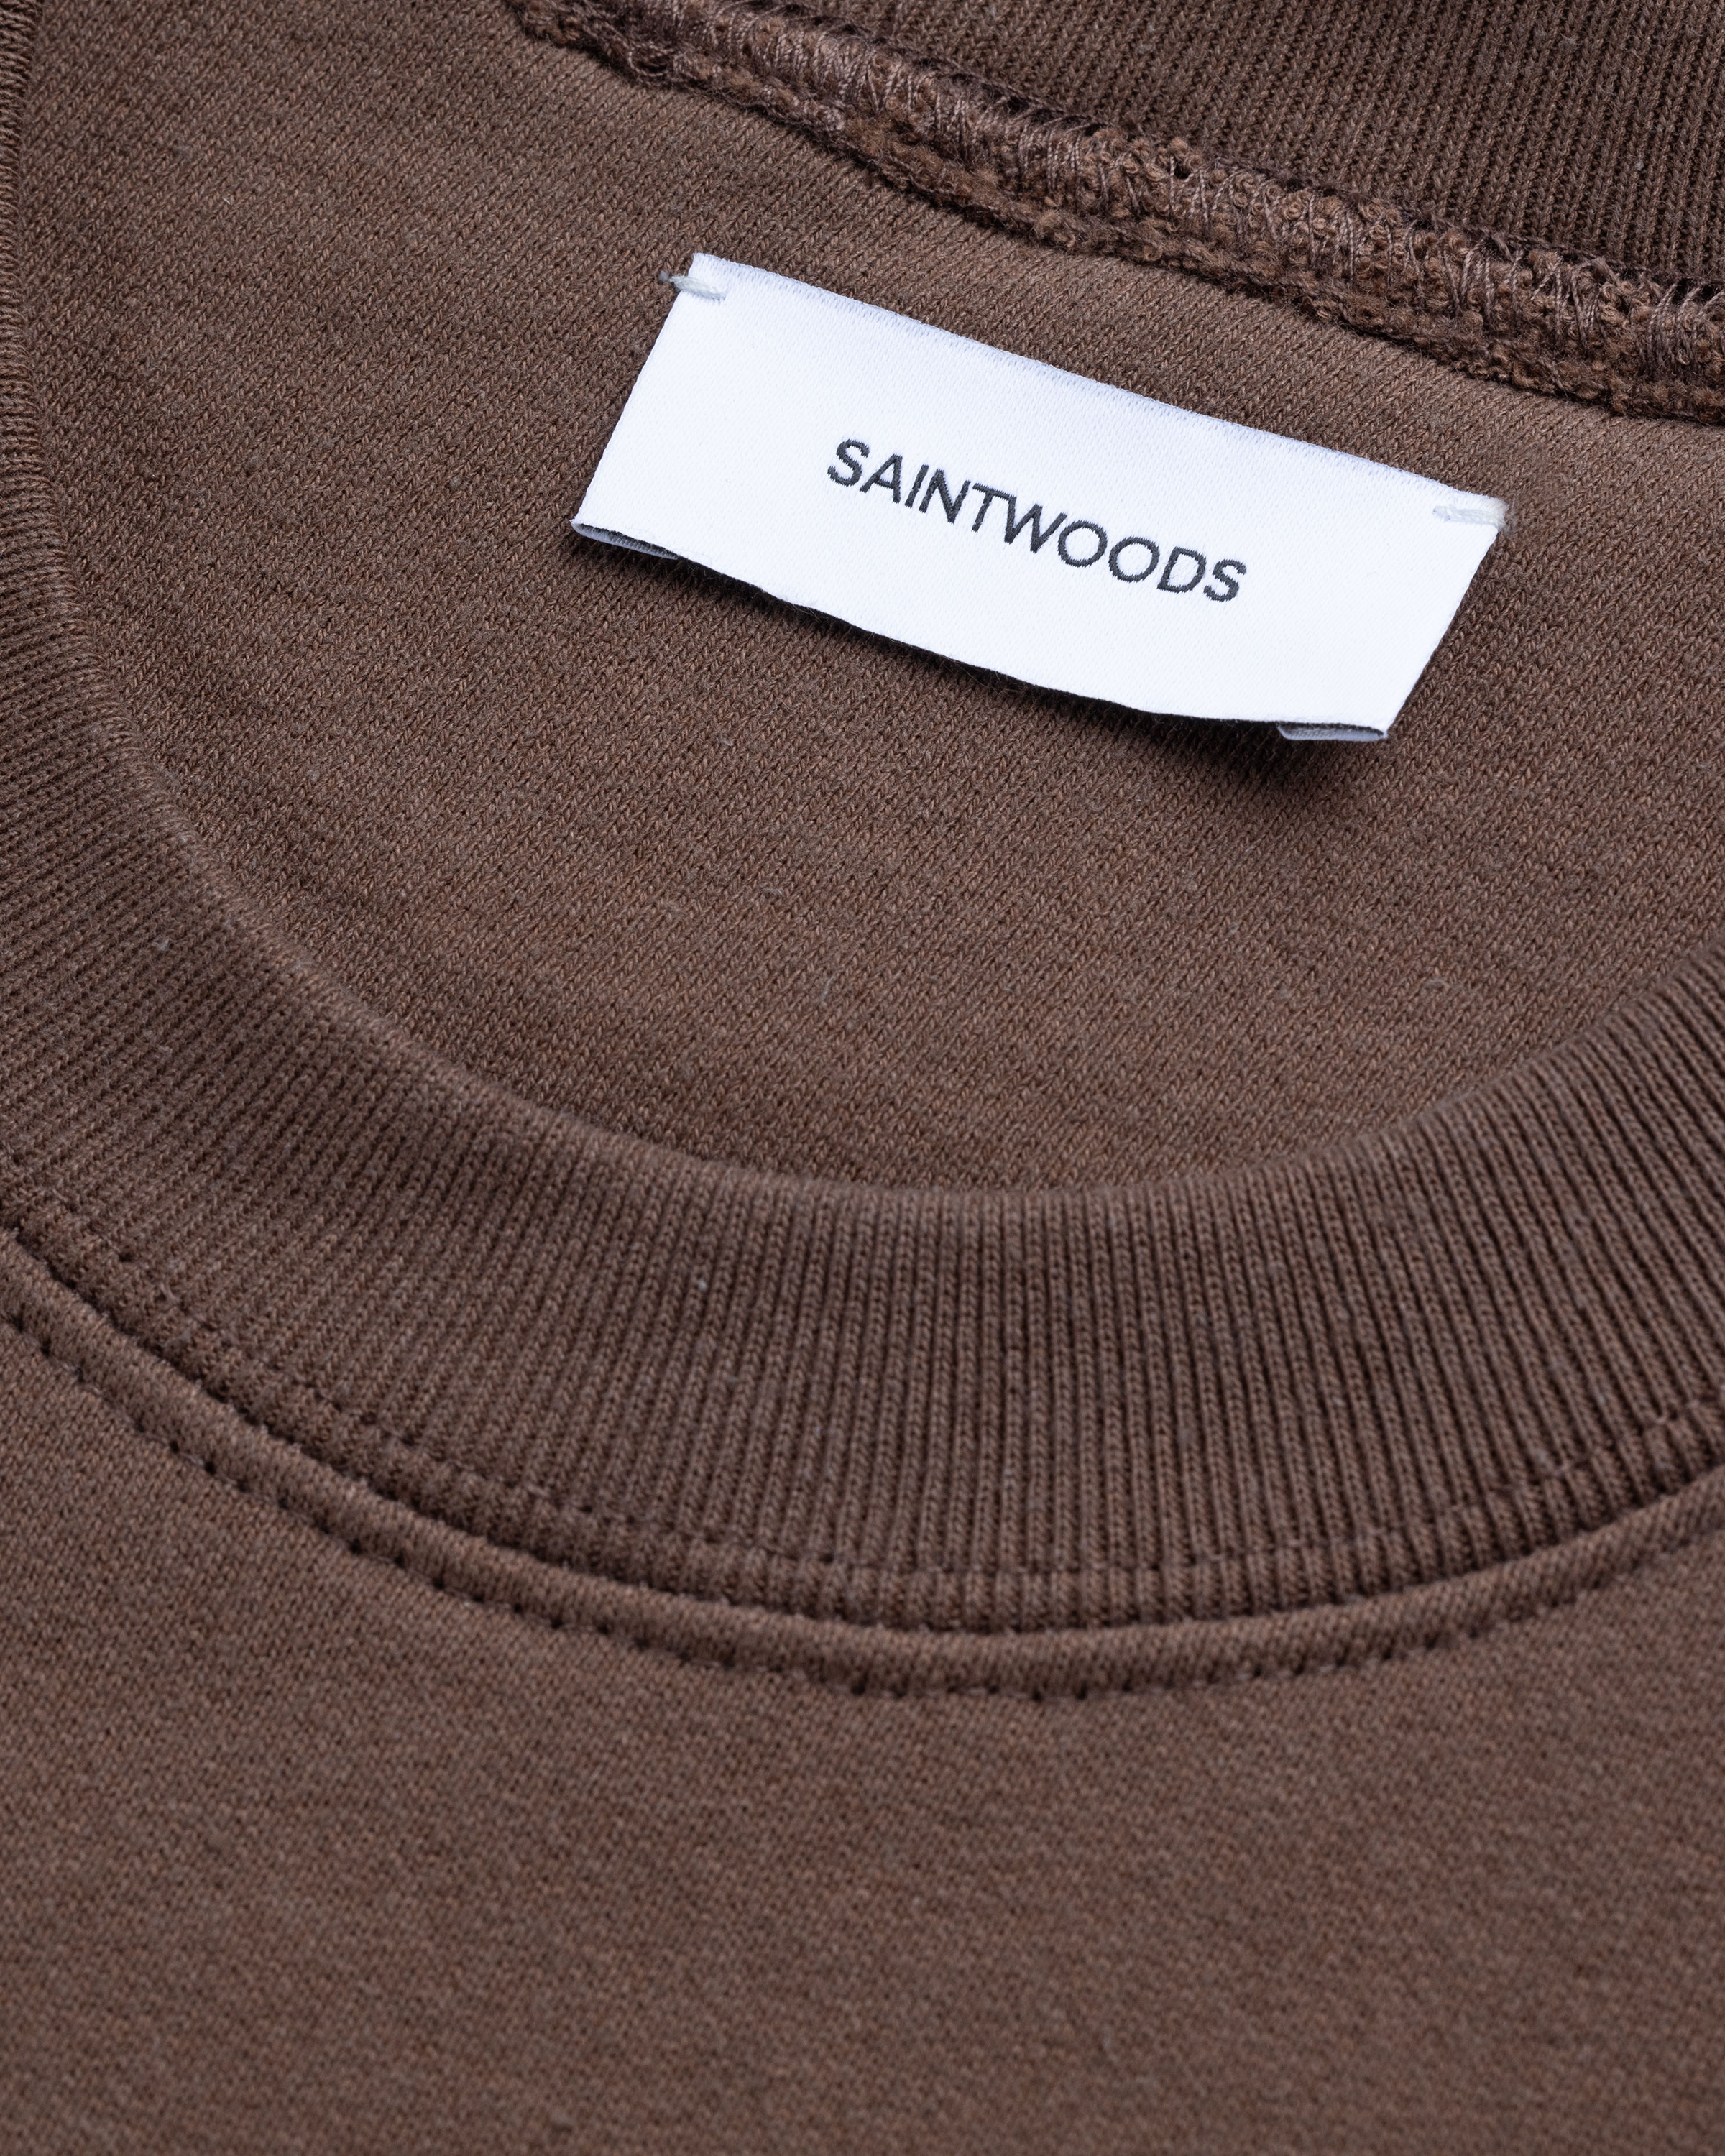 Saintwoods - SW Sweatshirt Brown - Clothing - Brown - Image 6